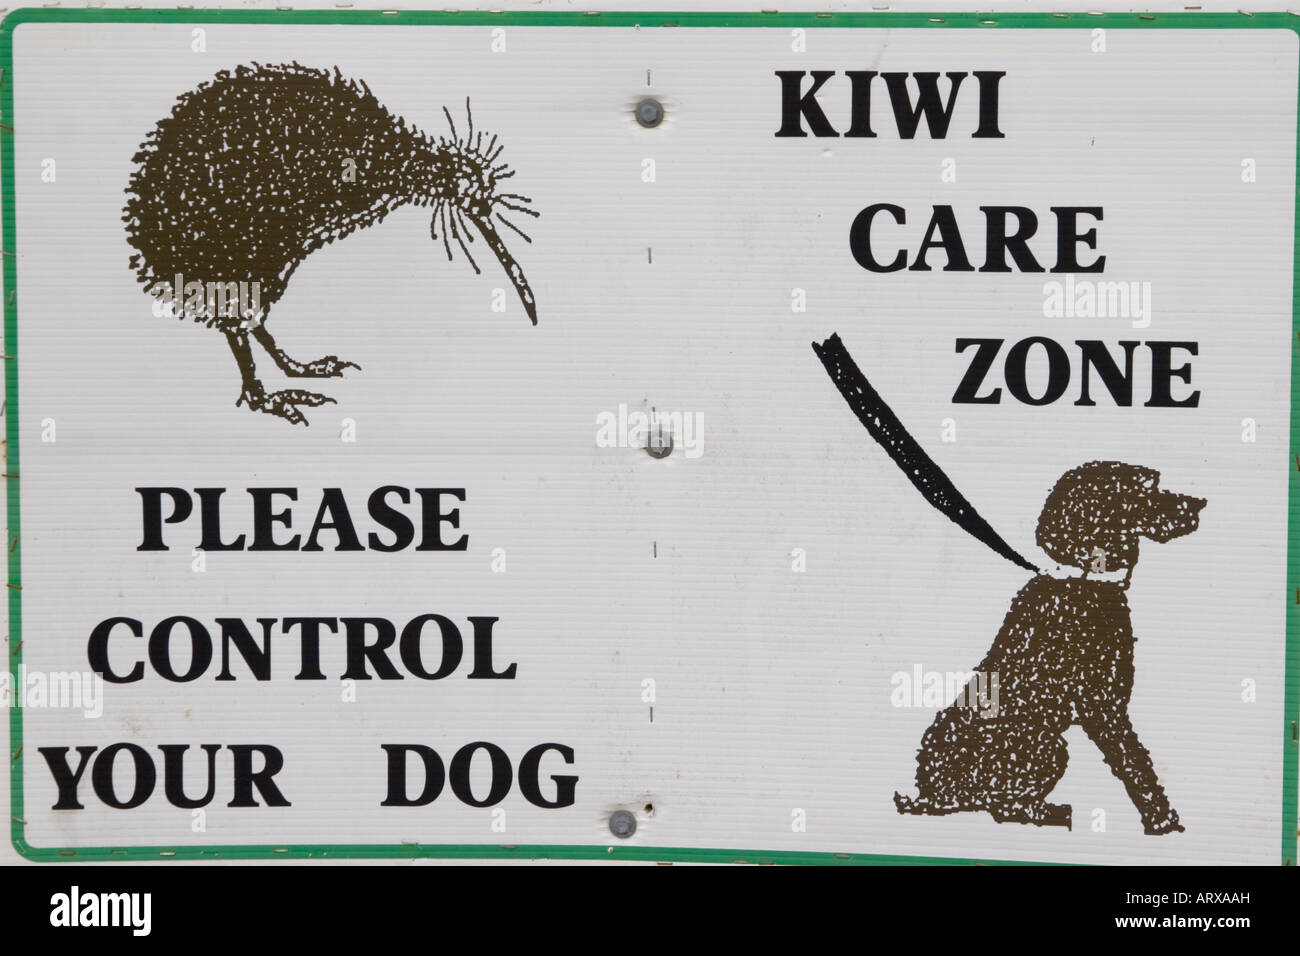 Kiwi care zone Stock Photo